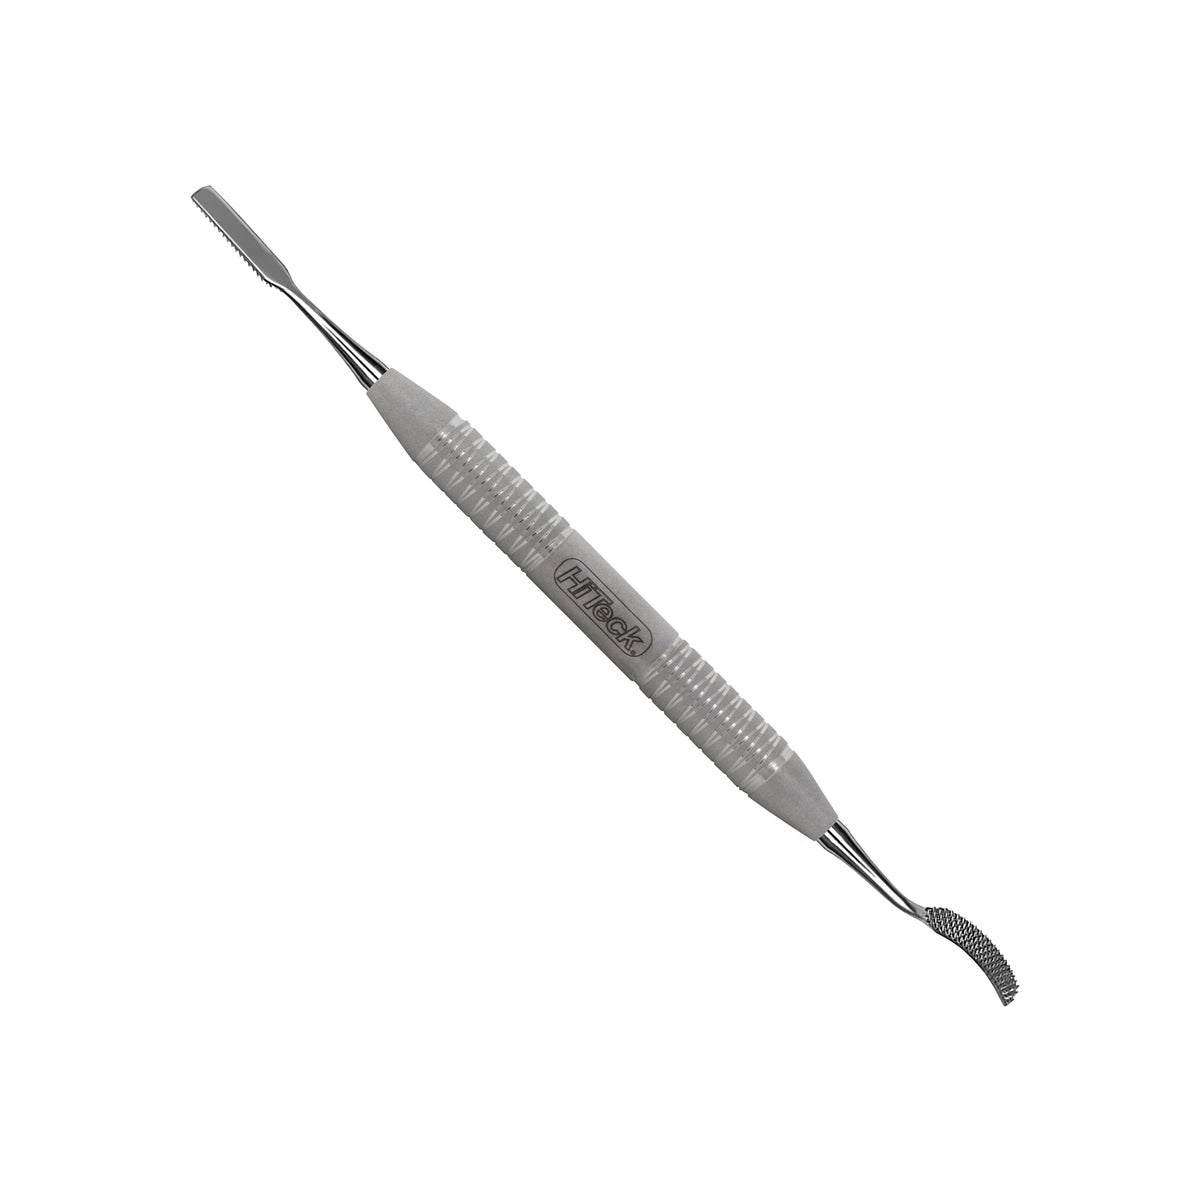 2X Miller Colburn, Cross Cut Surgical Bone File - HiTeck Medical Instruments